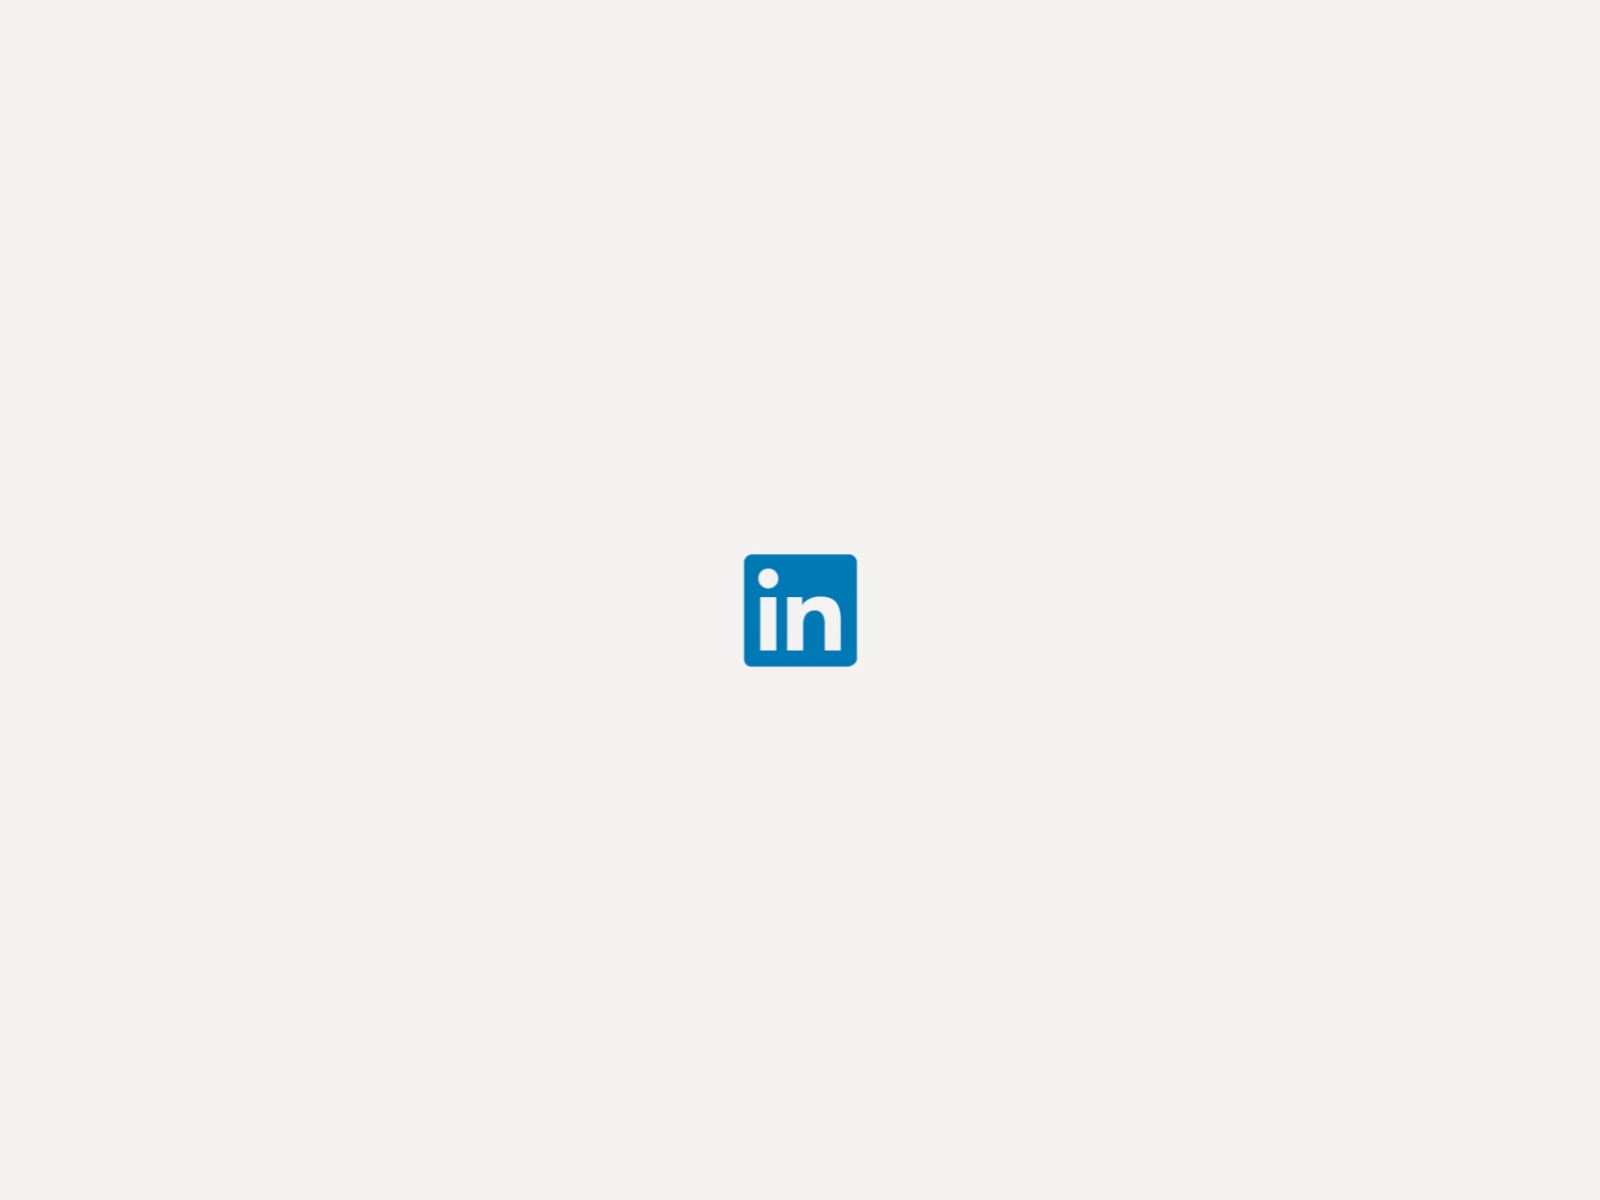 LinkedIn - Logo Animation Redesign Concept